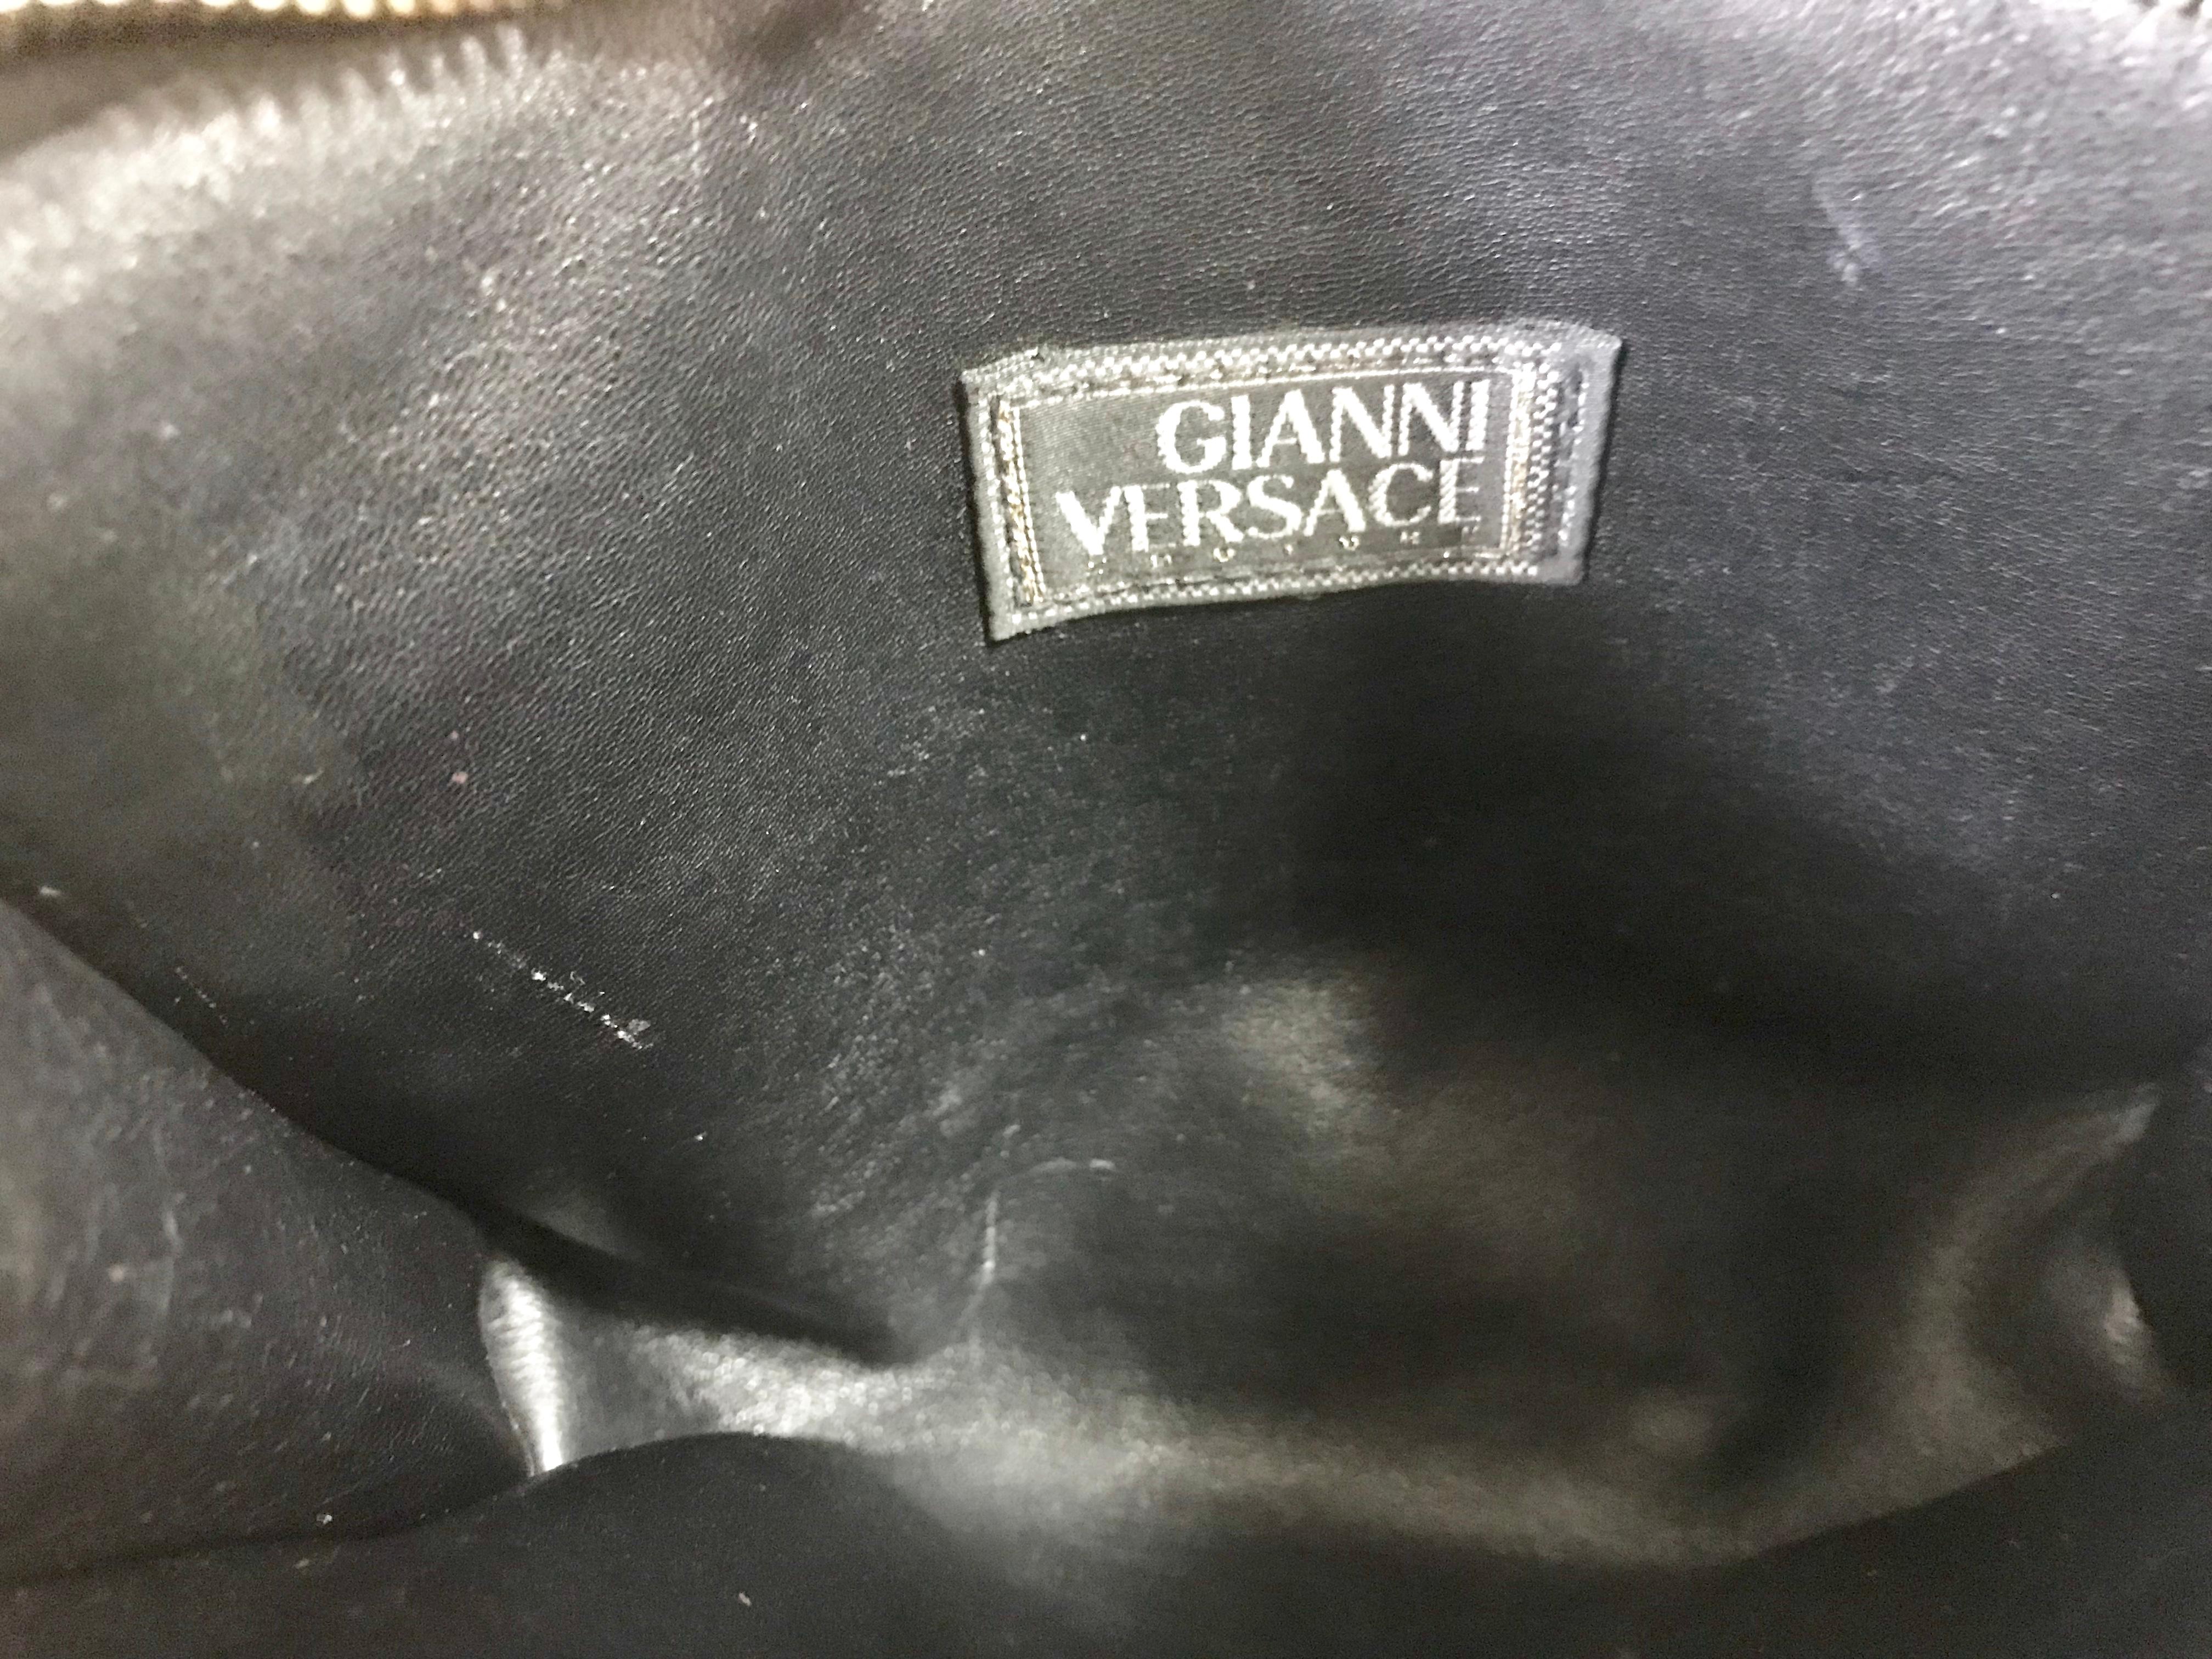 Vintage Gianni Versace black leather clutch purse, pouch, case bag with medusa. 1